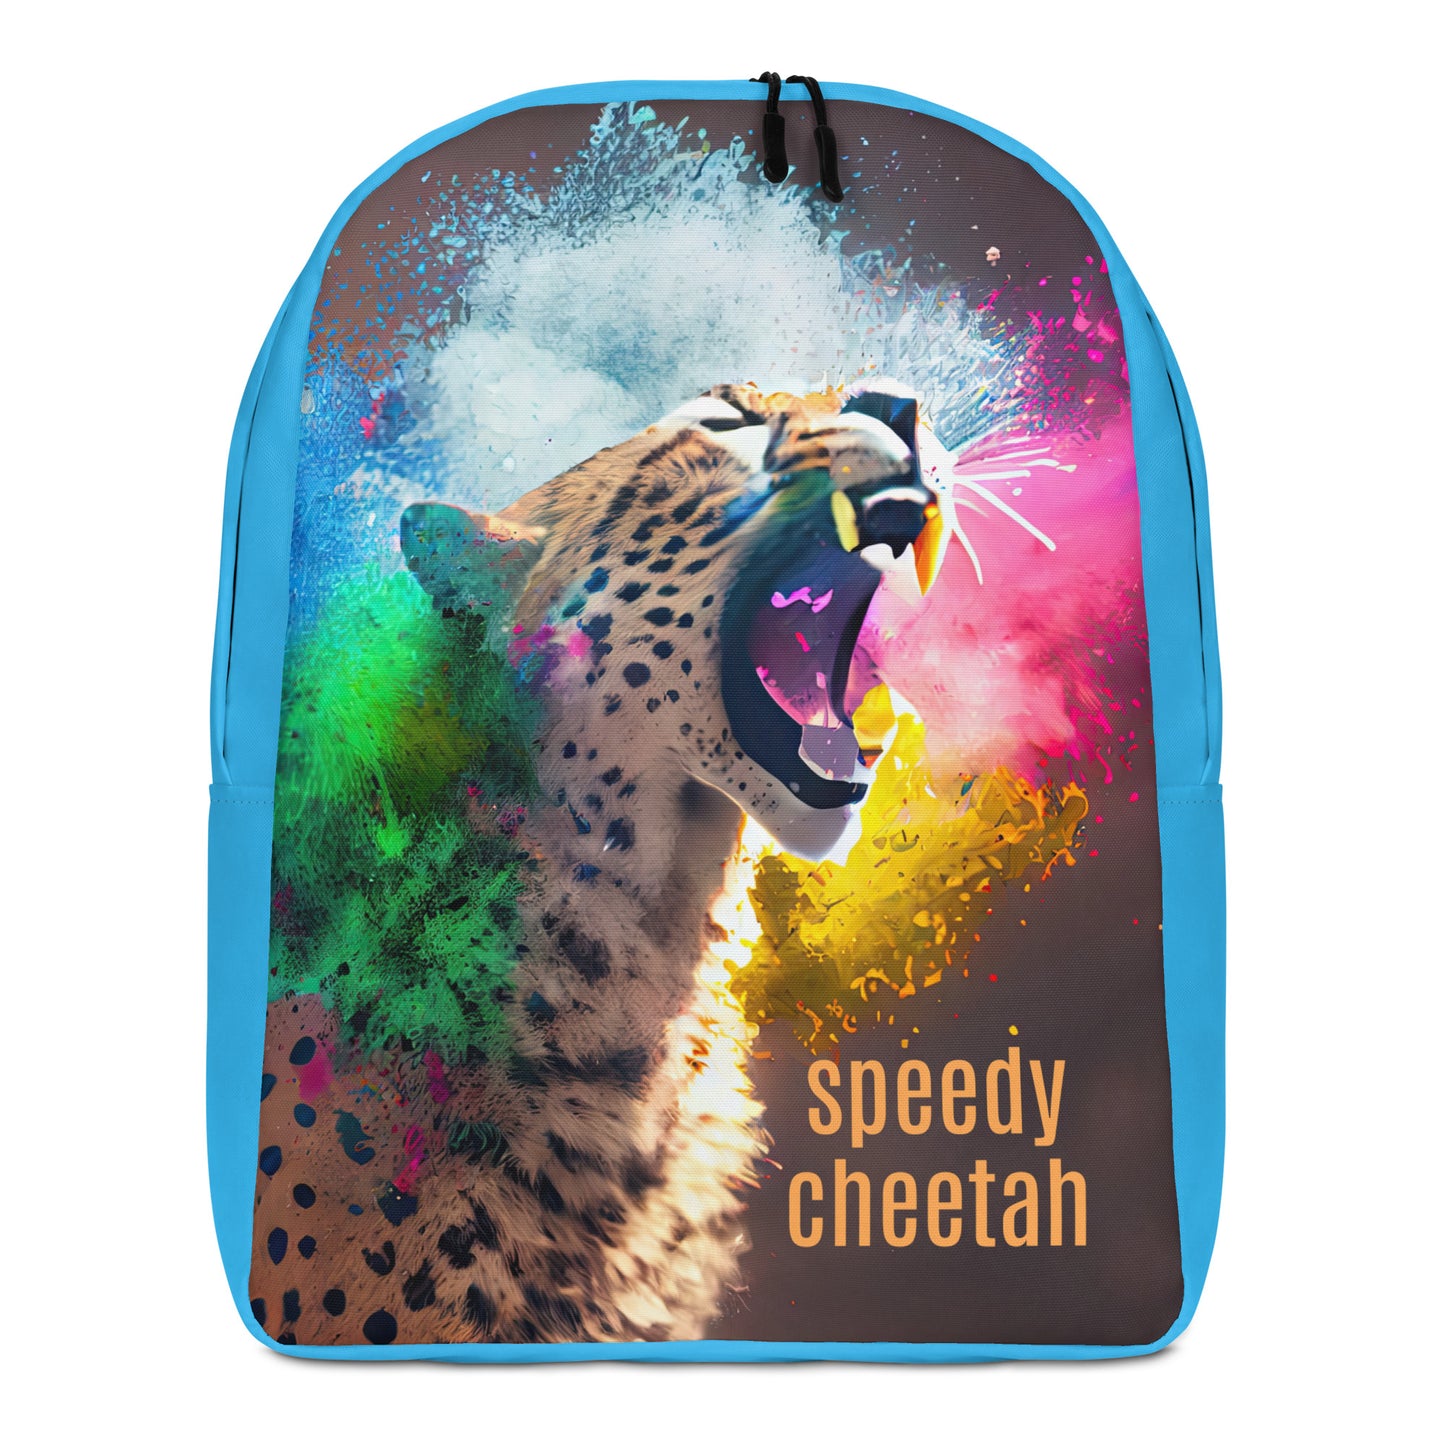 Speedy Cheetah Backpack by Lola